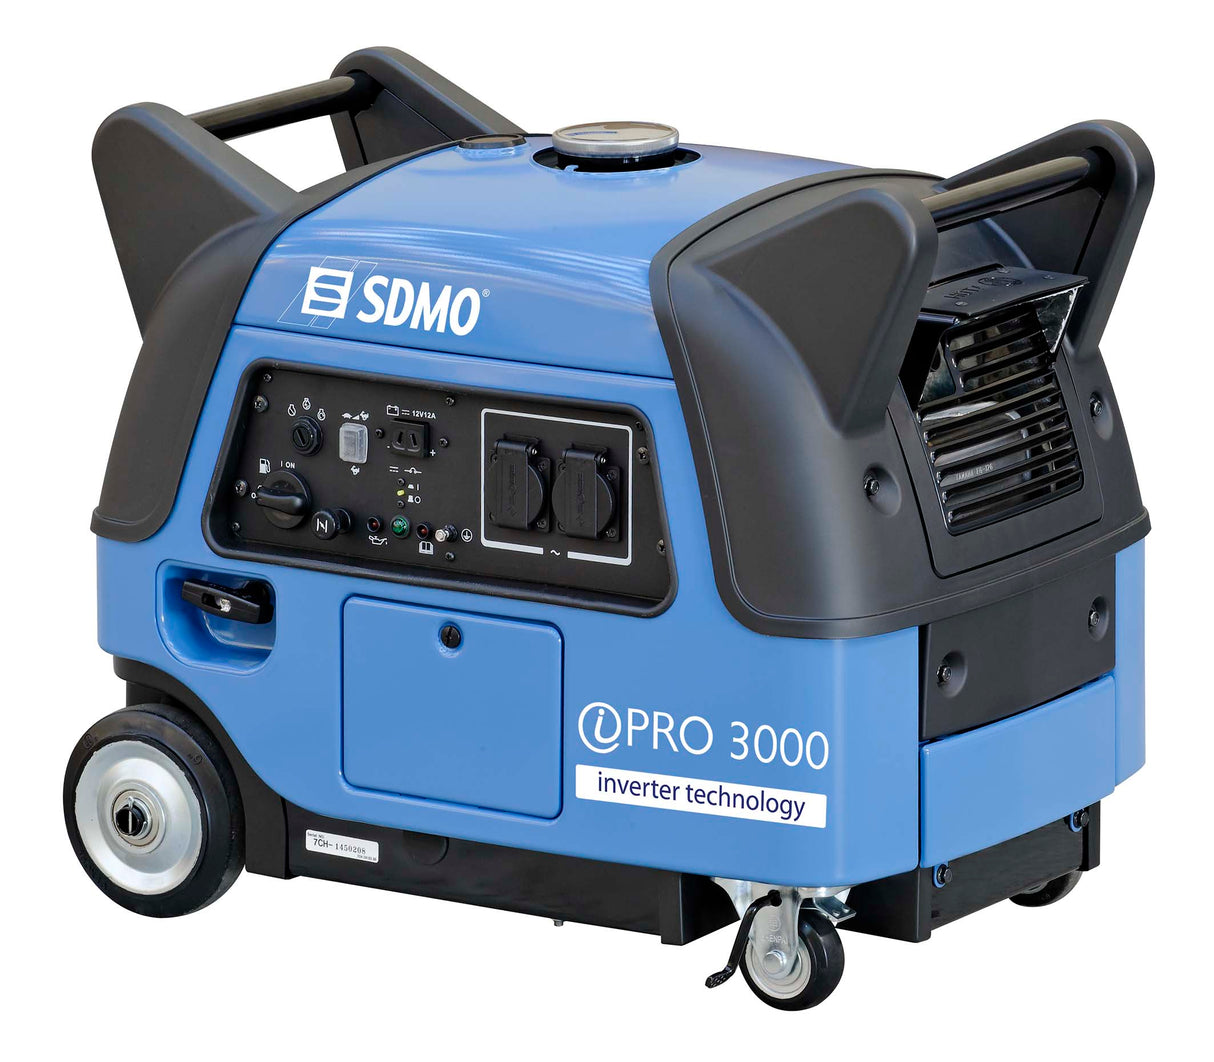 Portable power generator SDMO INVERTER PRO 3000 E Prindus C5